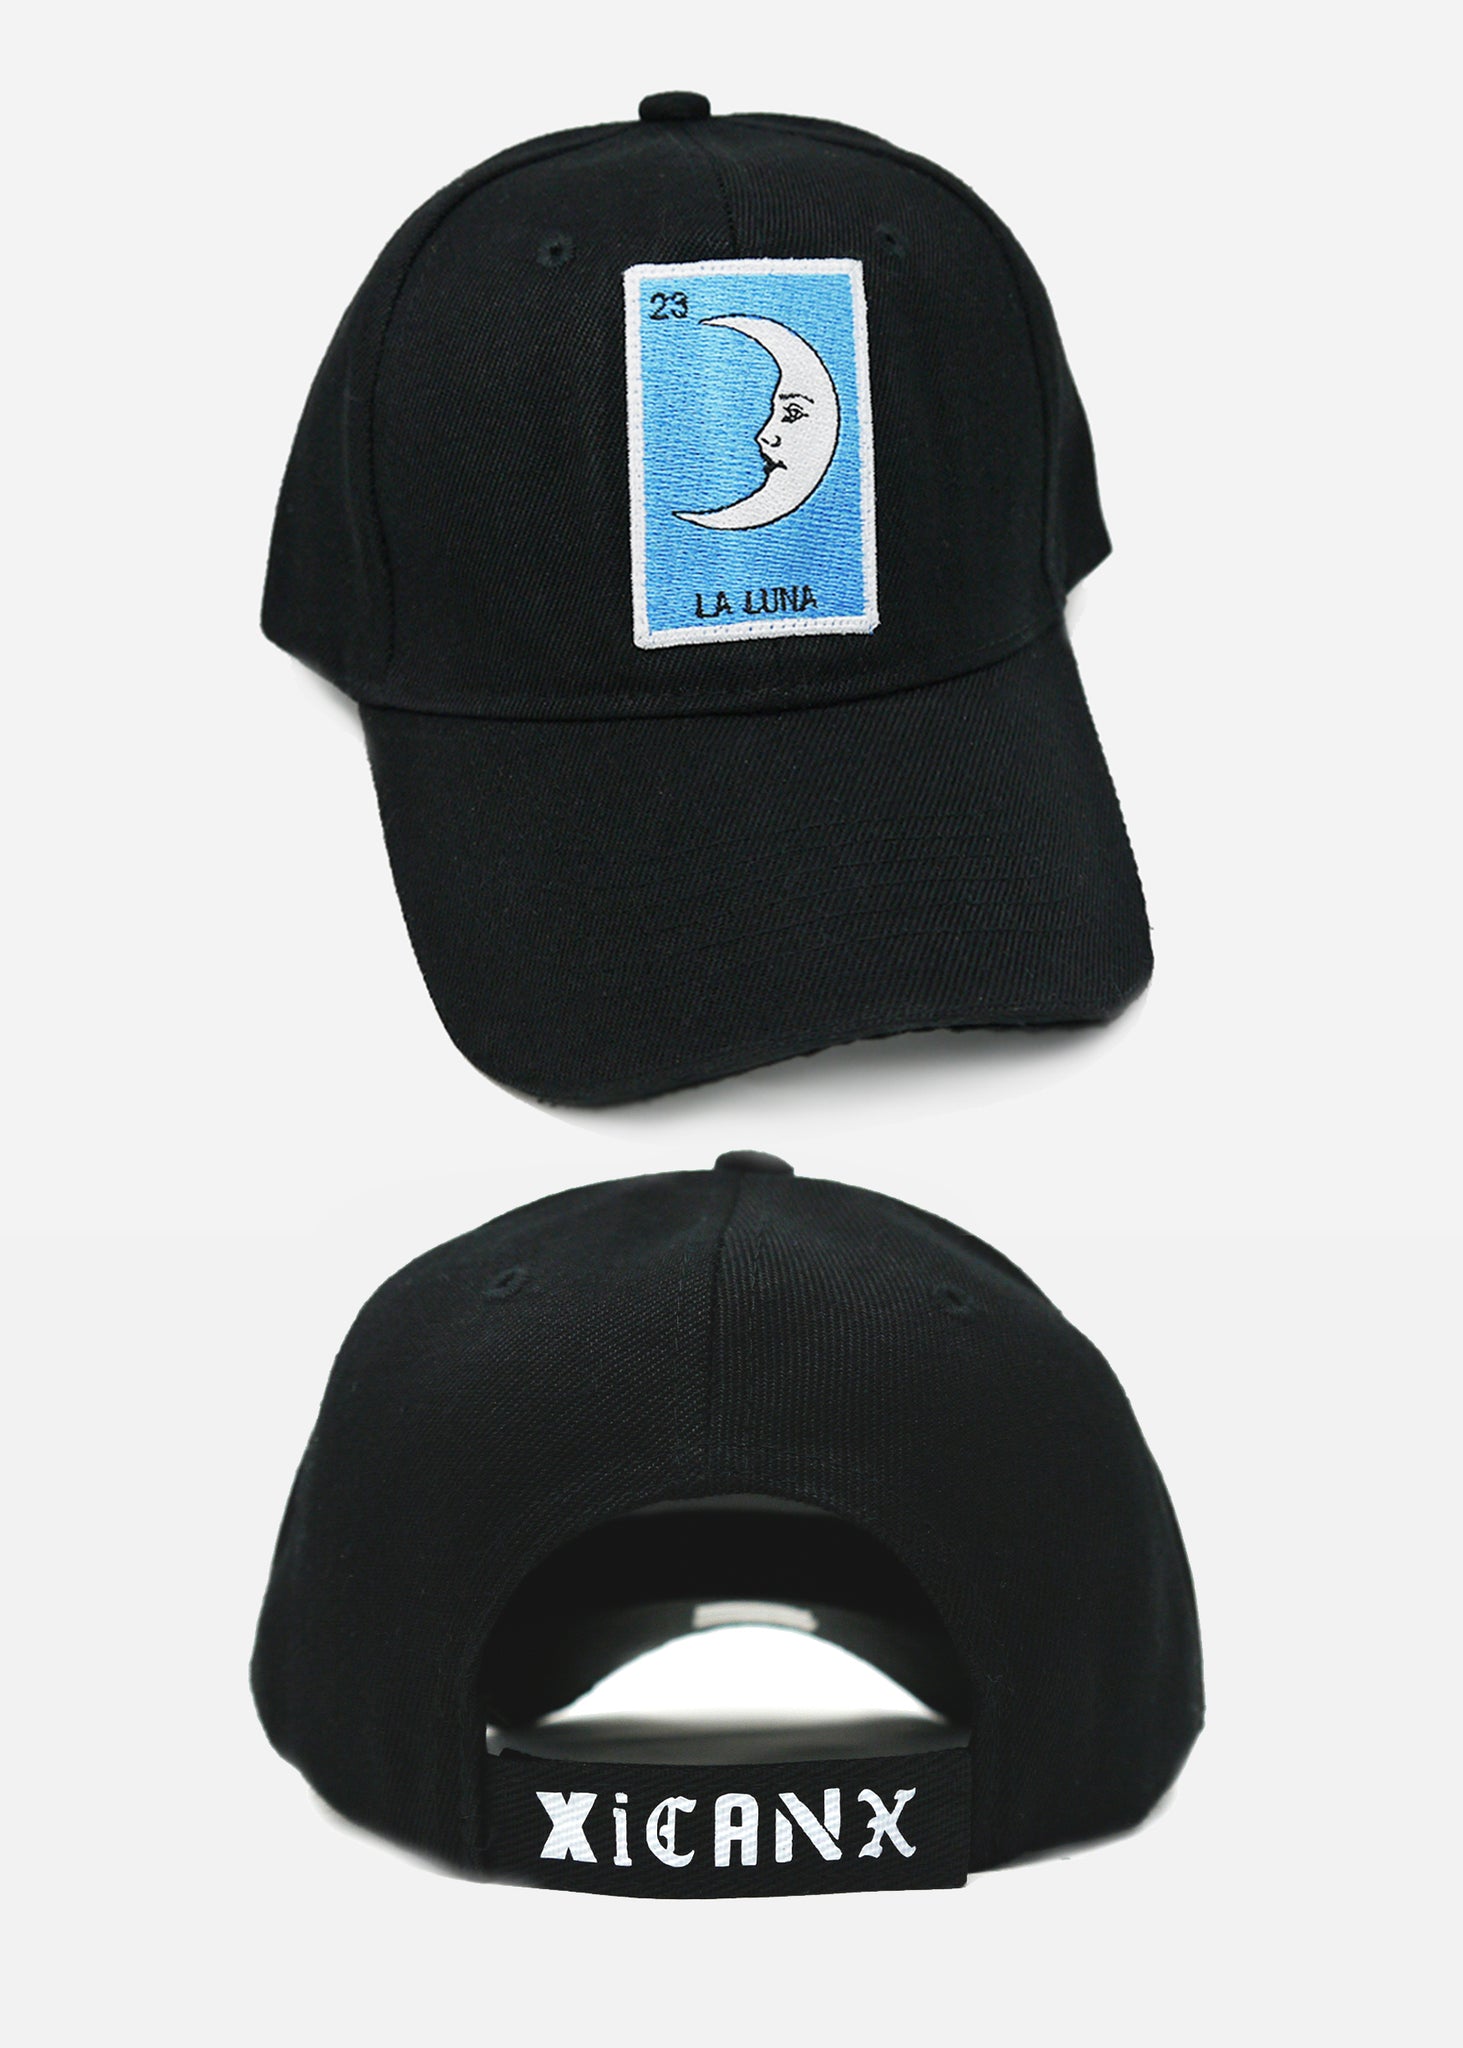 Xicanx Baseball Hat